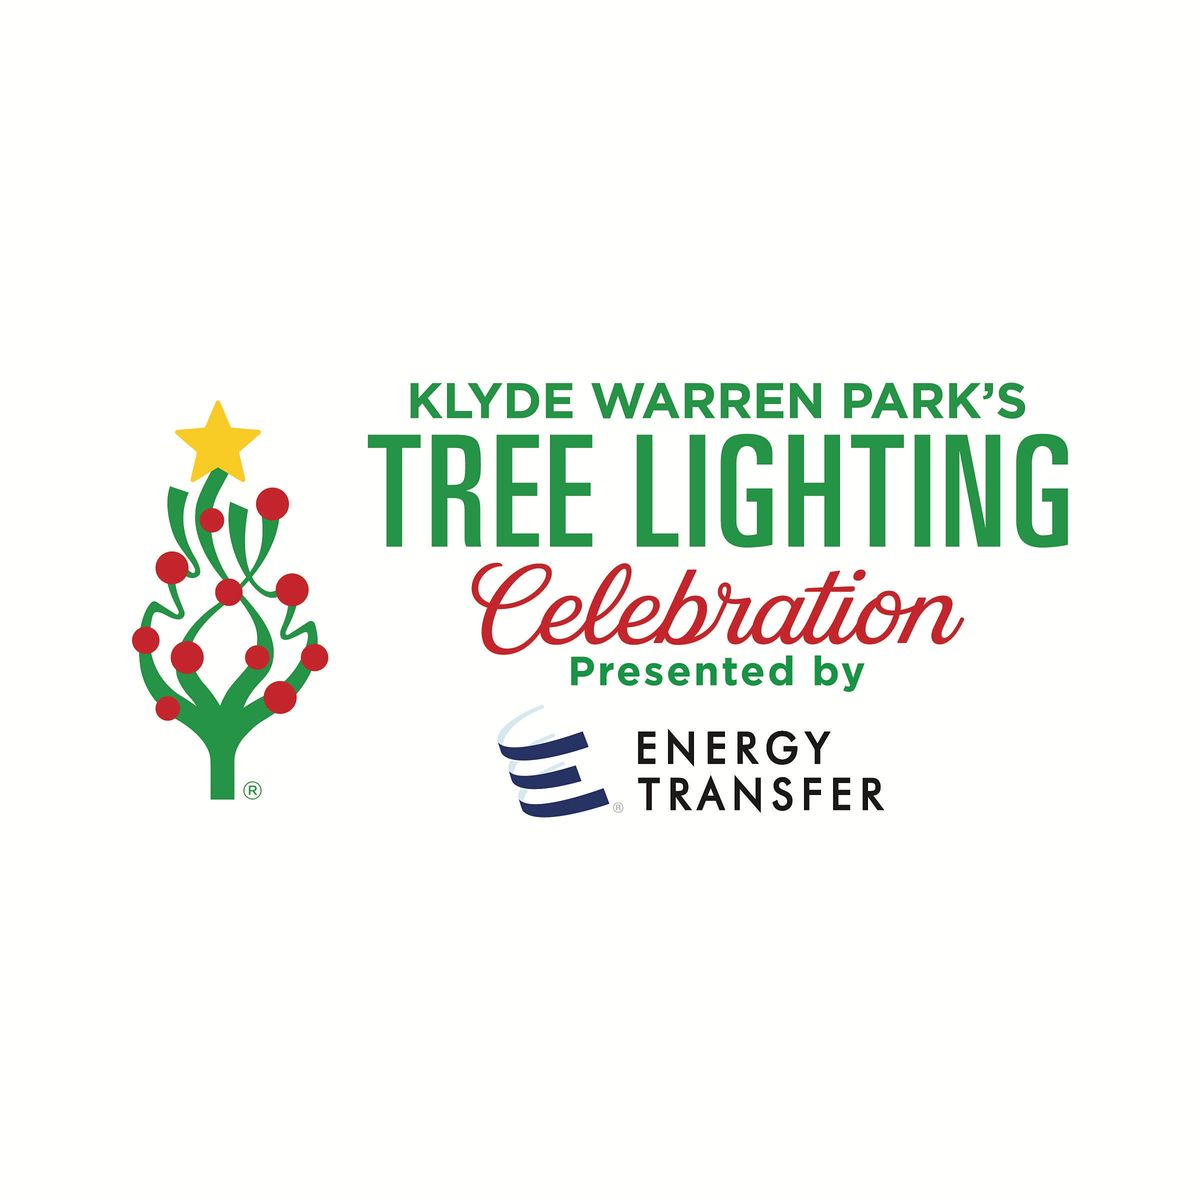 Klyde Warren Park's Tree Lighting Celebration presented by Energy Transfer